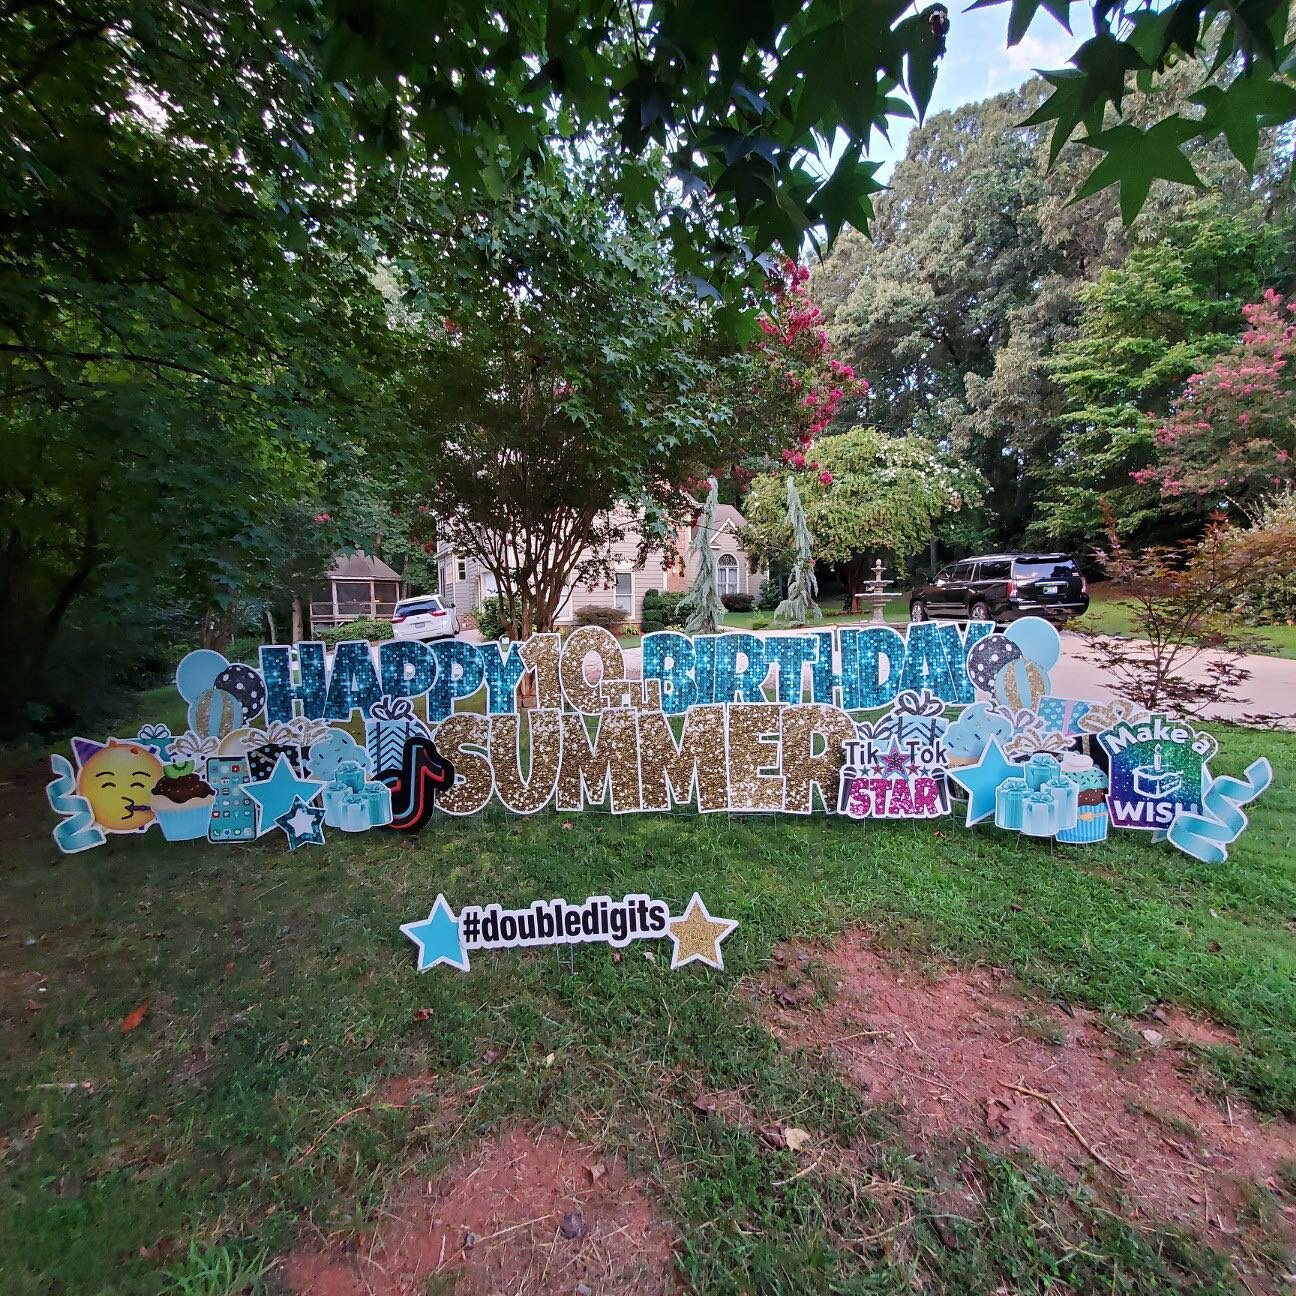 Happy 10th birthday Summer!! 🤩

#Harrisburgyardcard #harrisburgnc #concordnc #midlandnc #yardcard #yardsign #happybirthday #party #celebrate #sayitintheyard #supportlocal #doubledigits